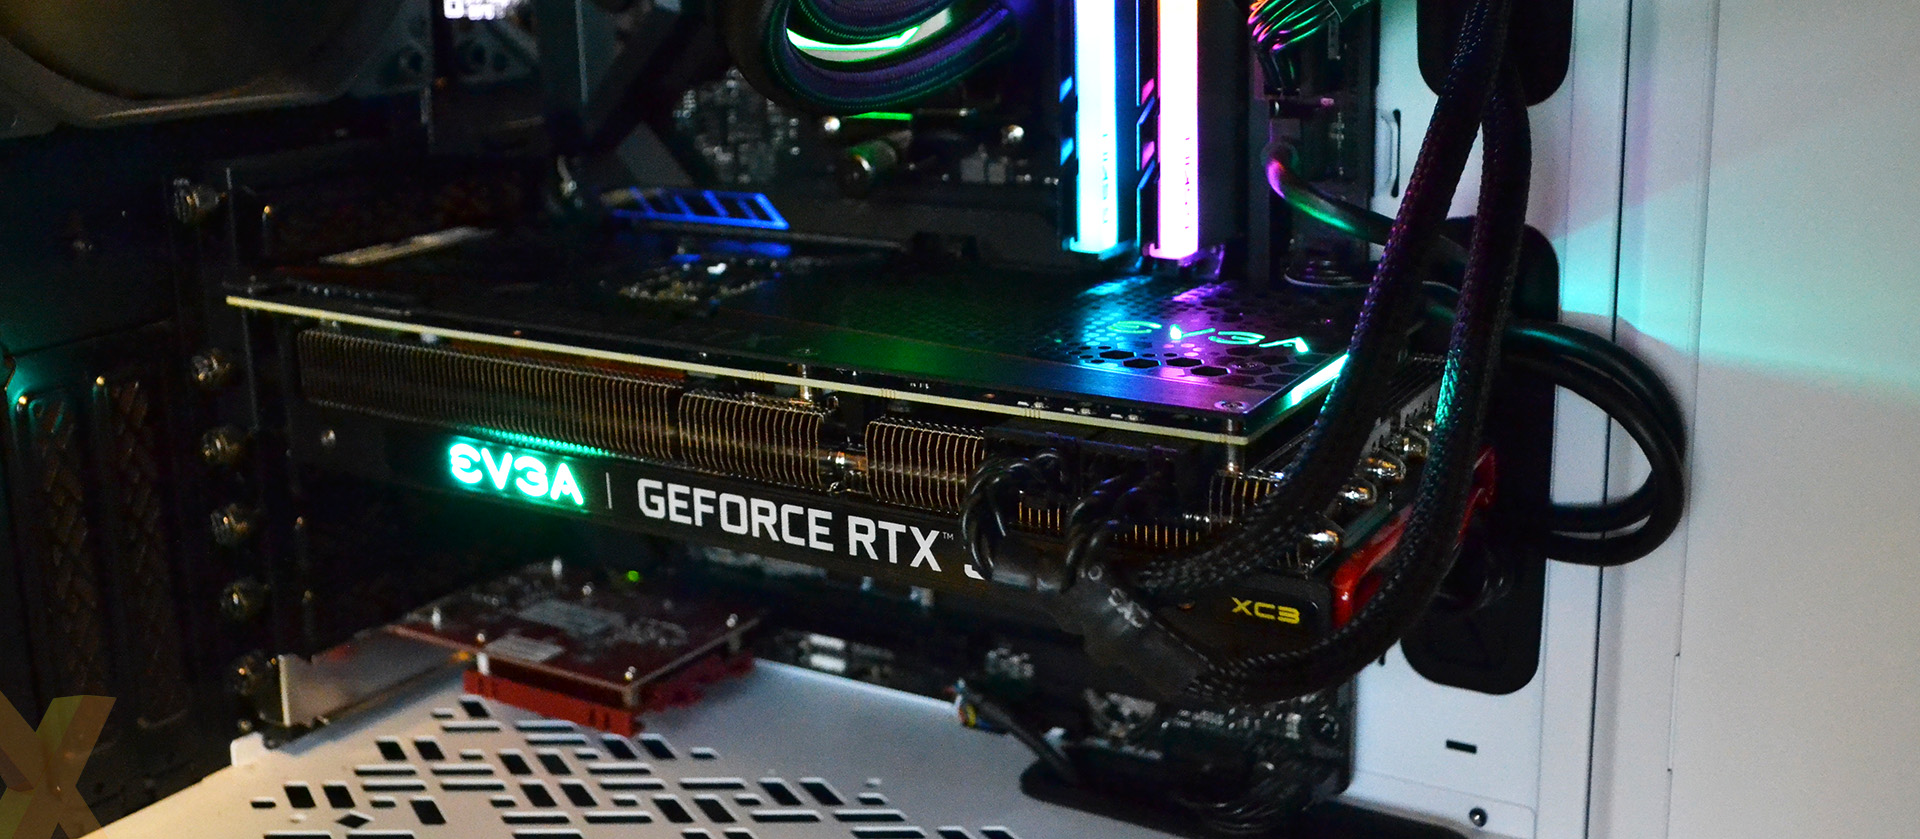 Review: EVGA GeForce RTX 3080 XC3 Ultra Gaming - Graphics - HEXUS.net